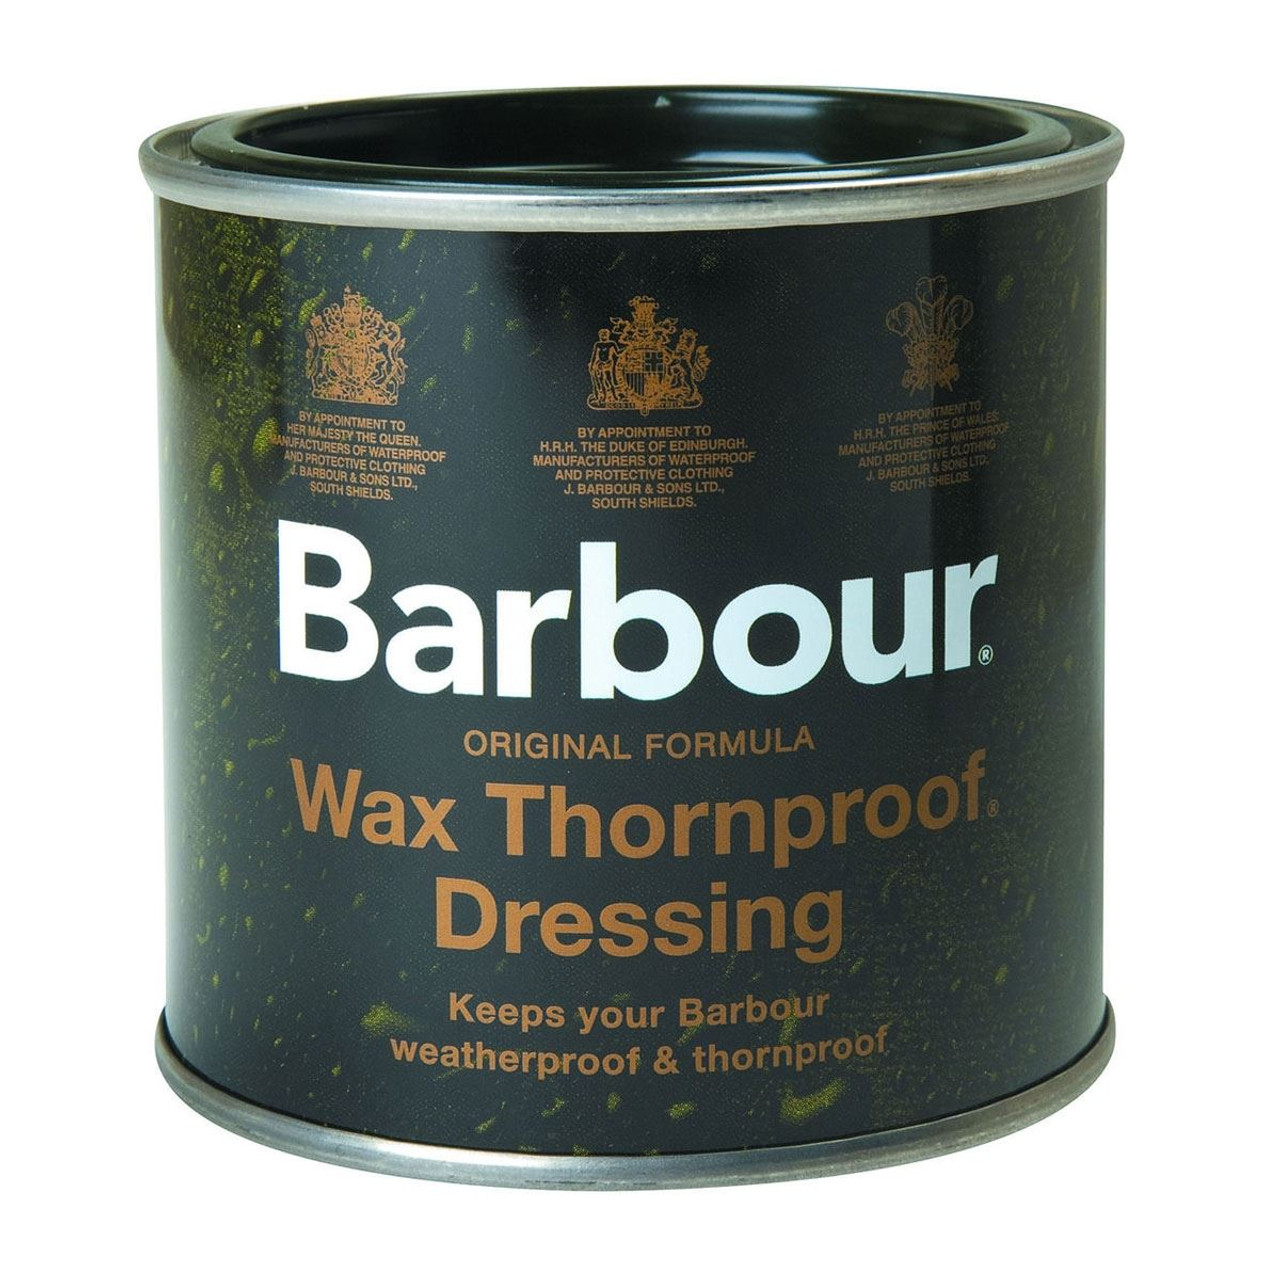 wax thornproof